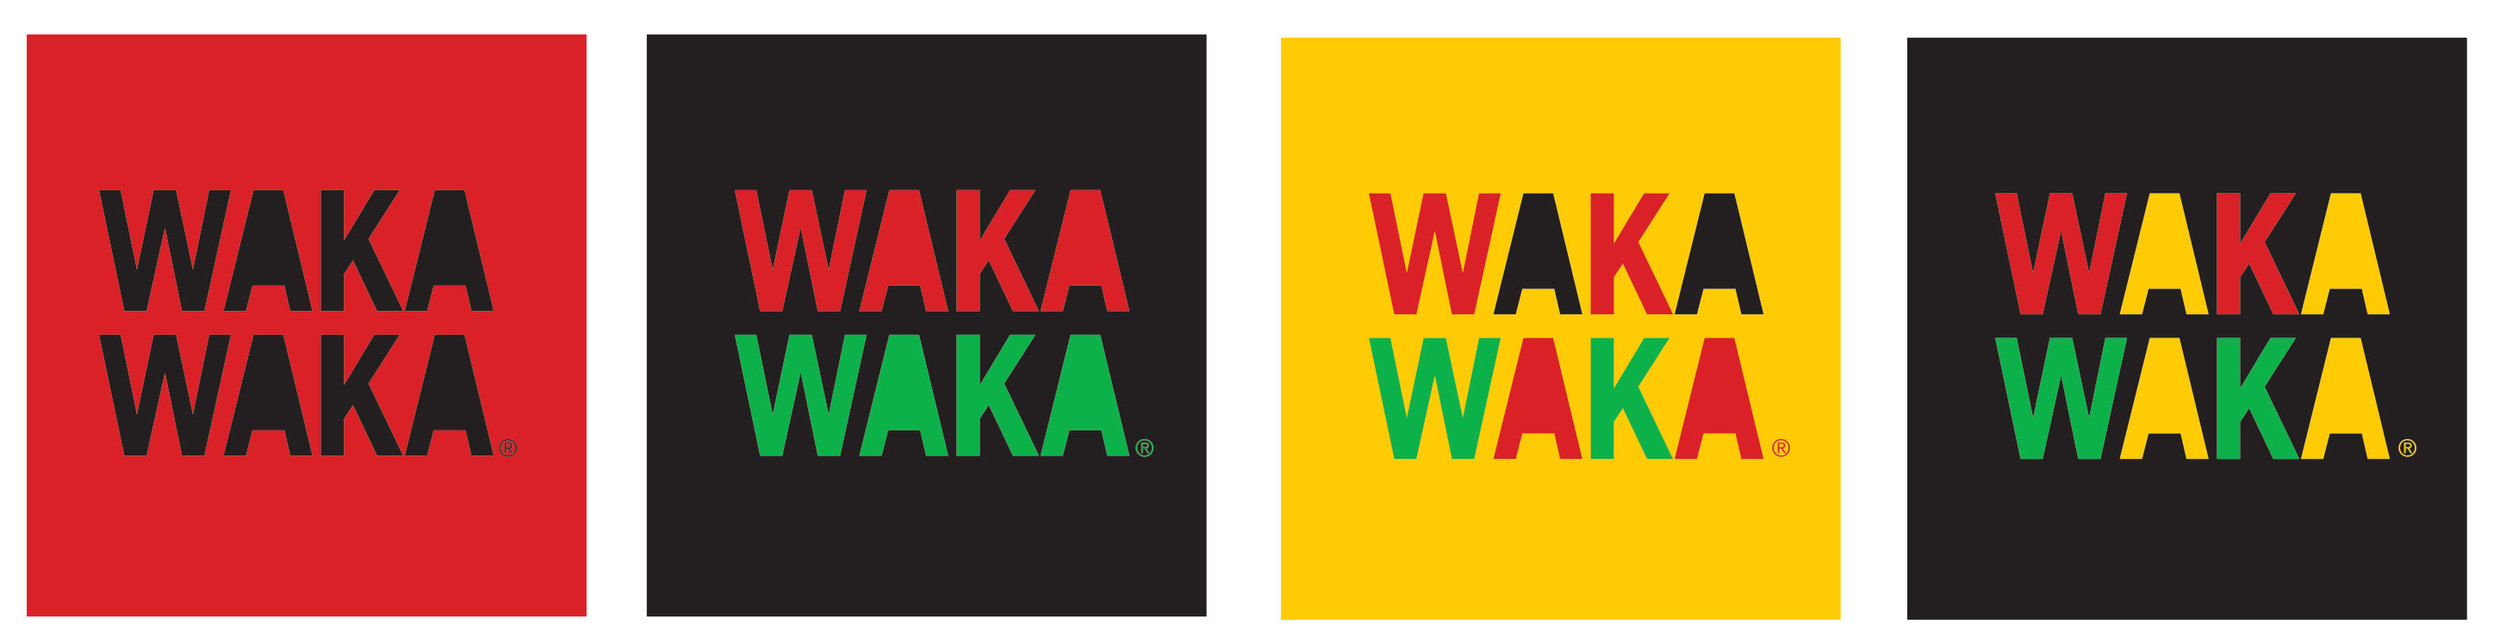 waka-t-shirts2.jpg